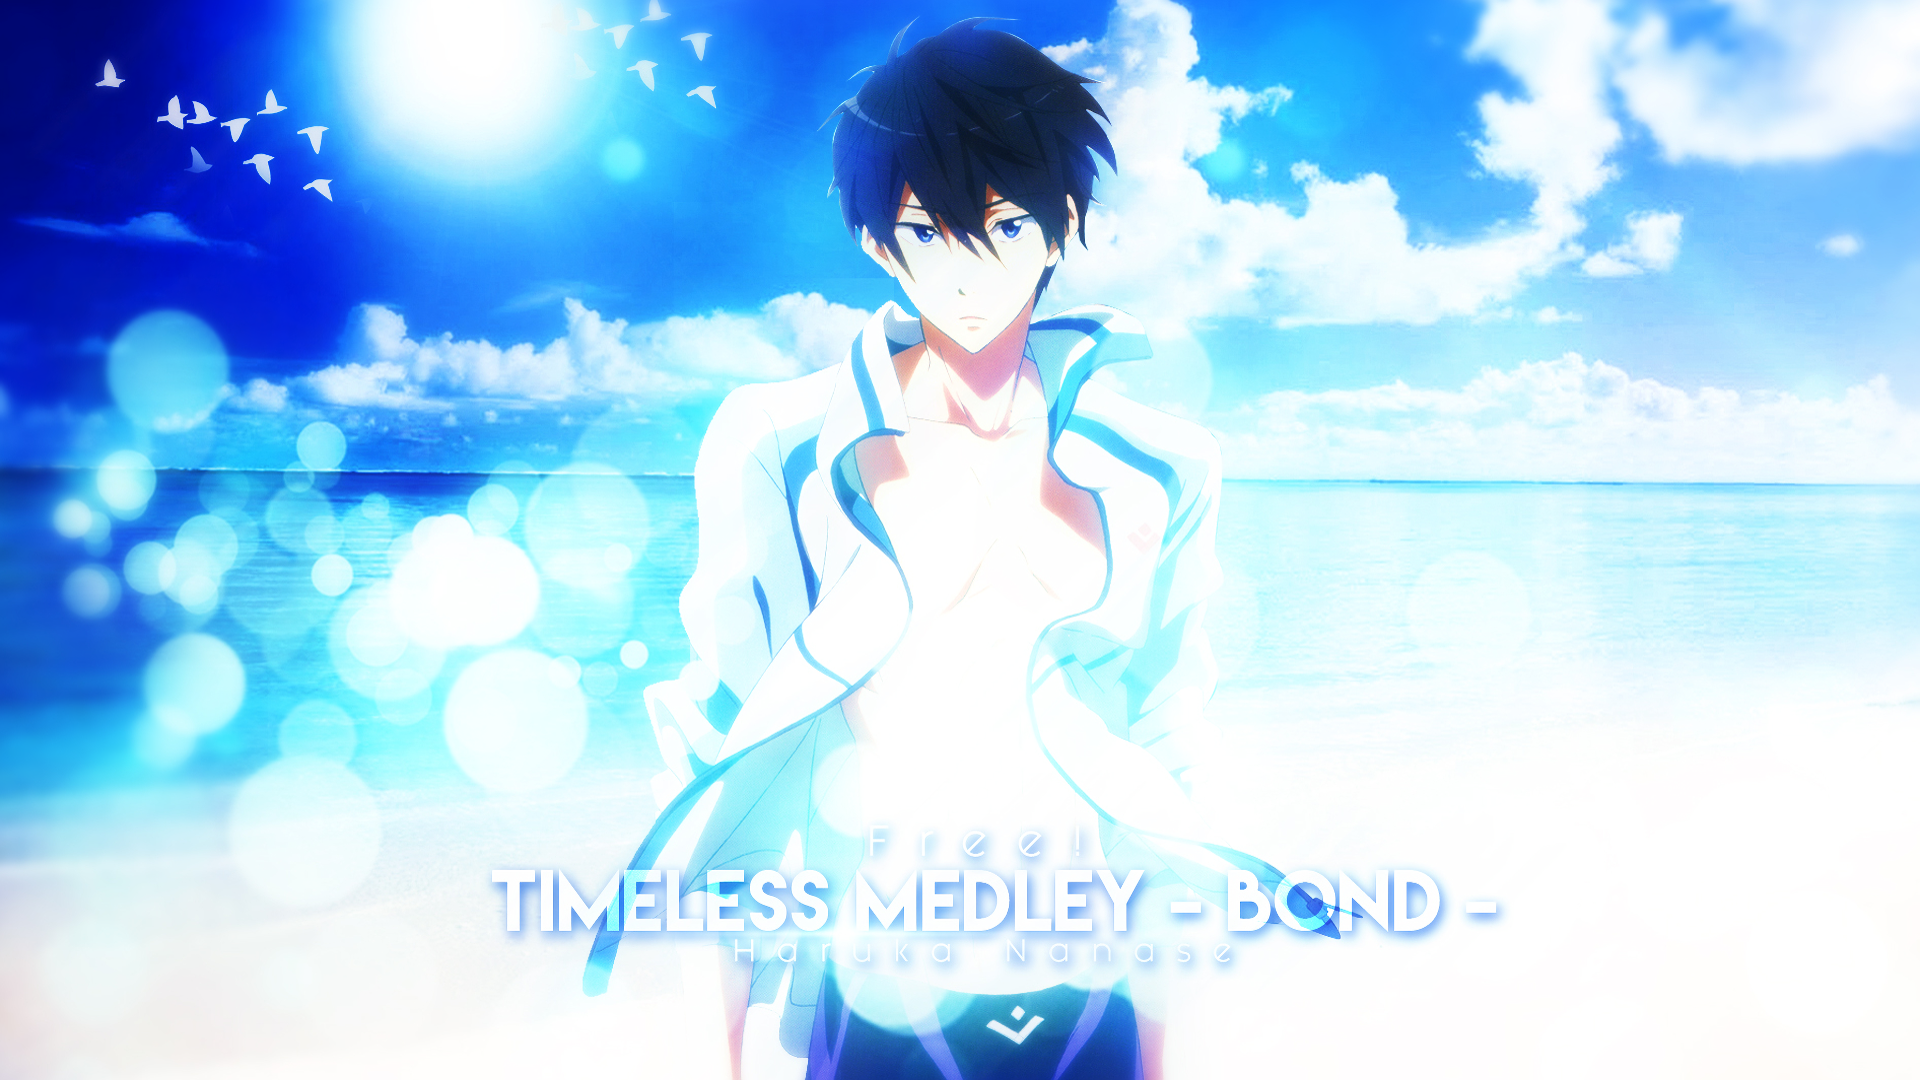 Free! Timeless Medley - Bond - Haruka Nanase Wallpaper by Yukisa